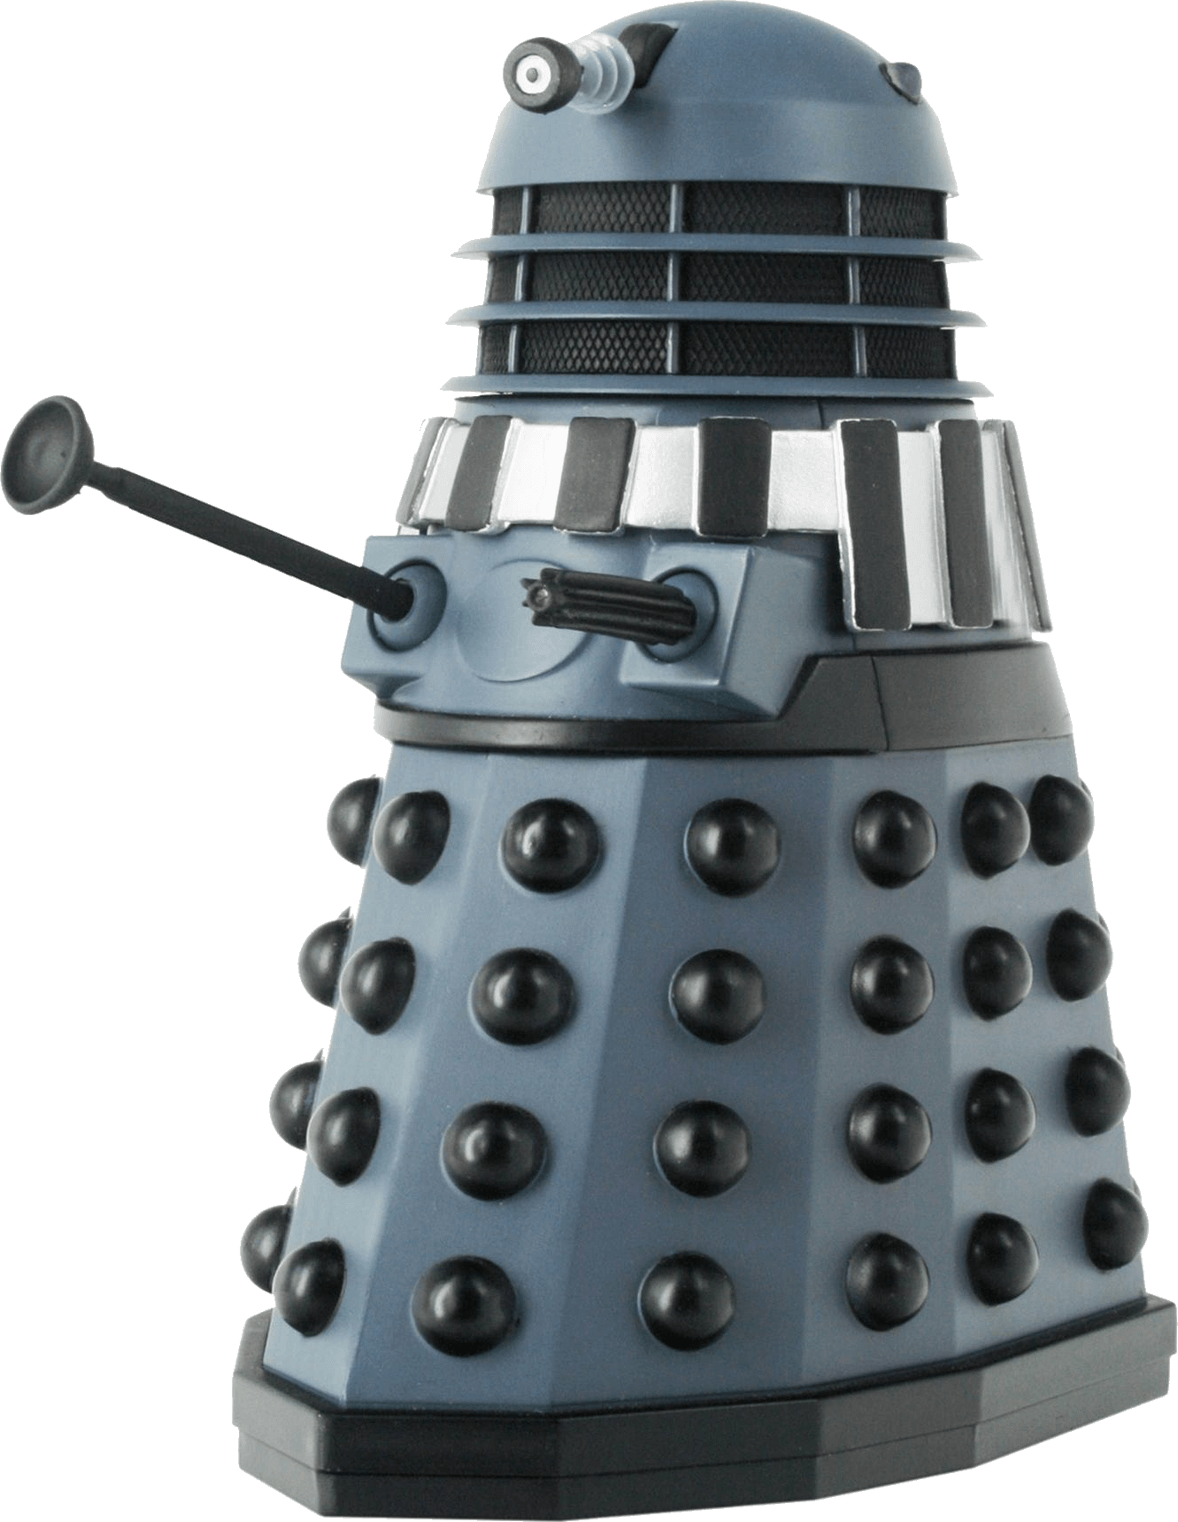 An image of a Dalek